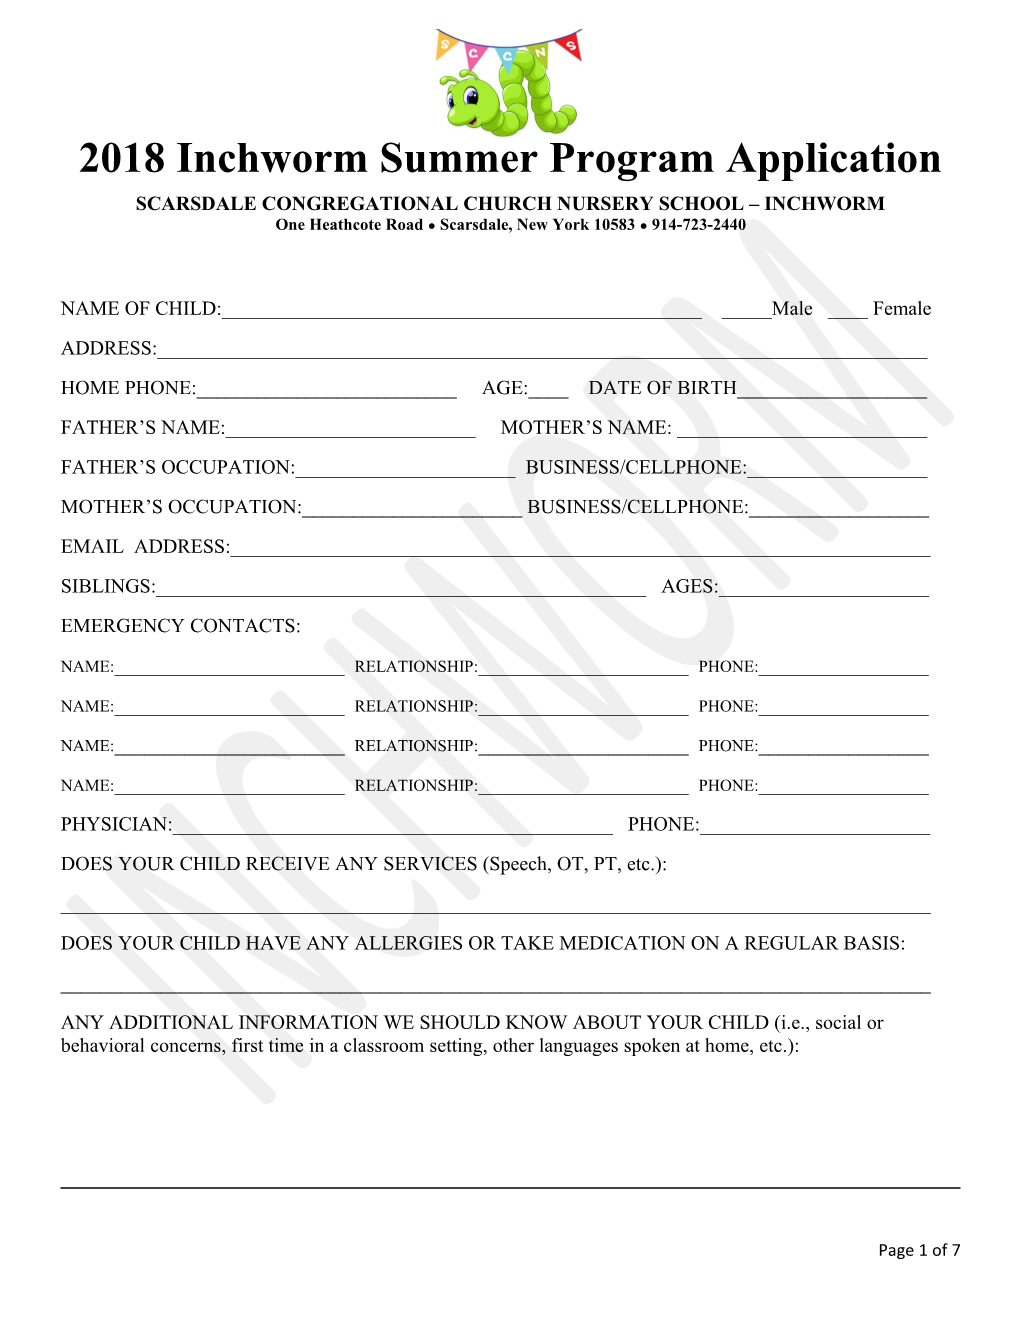 2012 Inchworm Summer Program Application Form